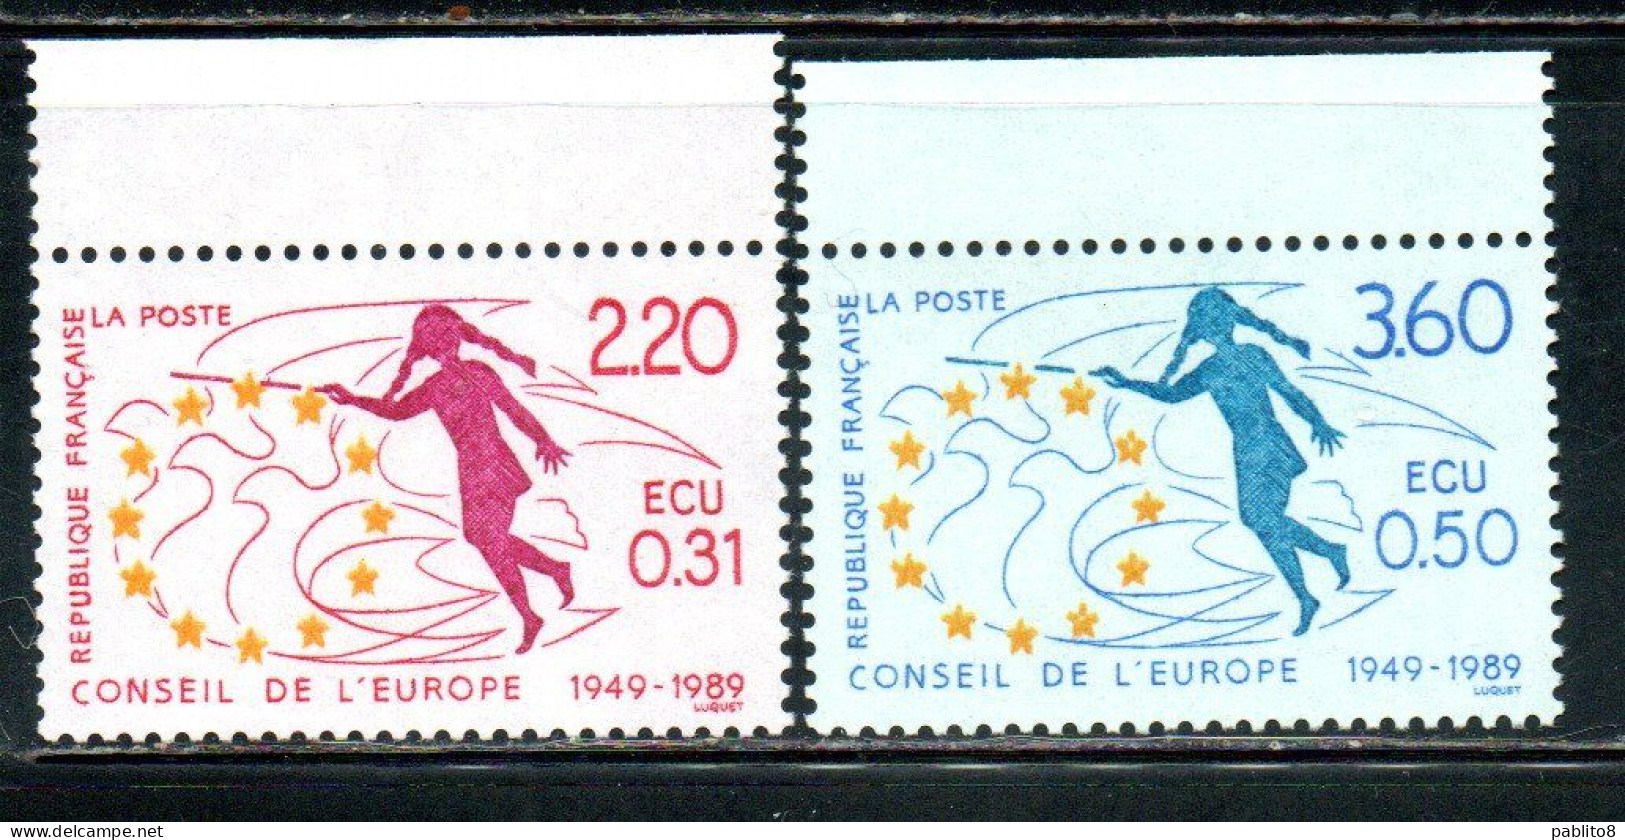 FRANCE FRANCIA 1989 CONSEIL DE L'EUROPE CONSIGLIO D'EUROPA EUROPEAN COUNCIL COMPLETE AET SERIE COMPLETA MNH - Unused Stamps